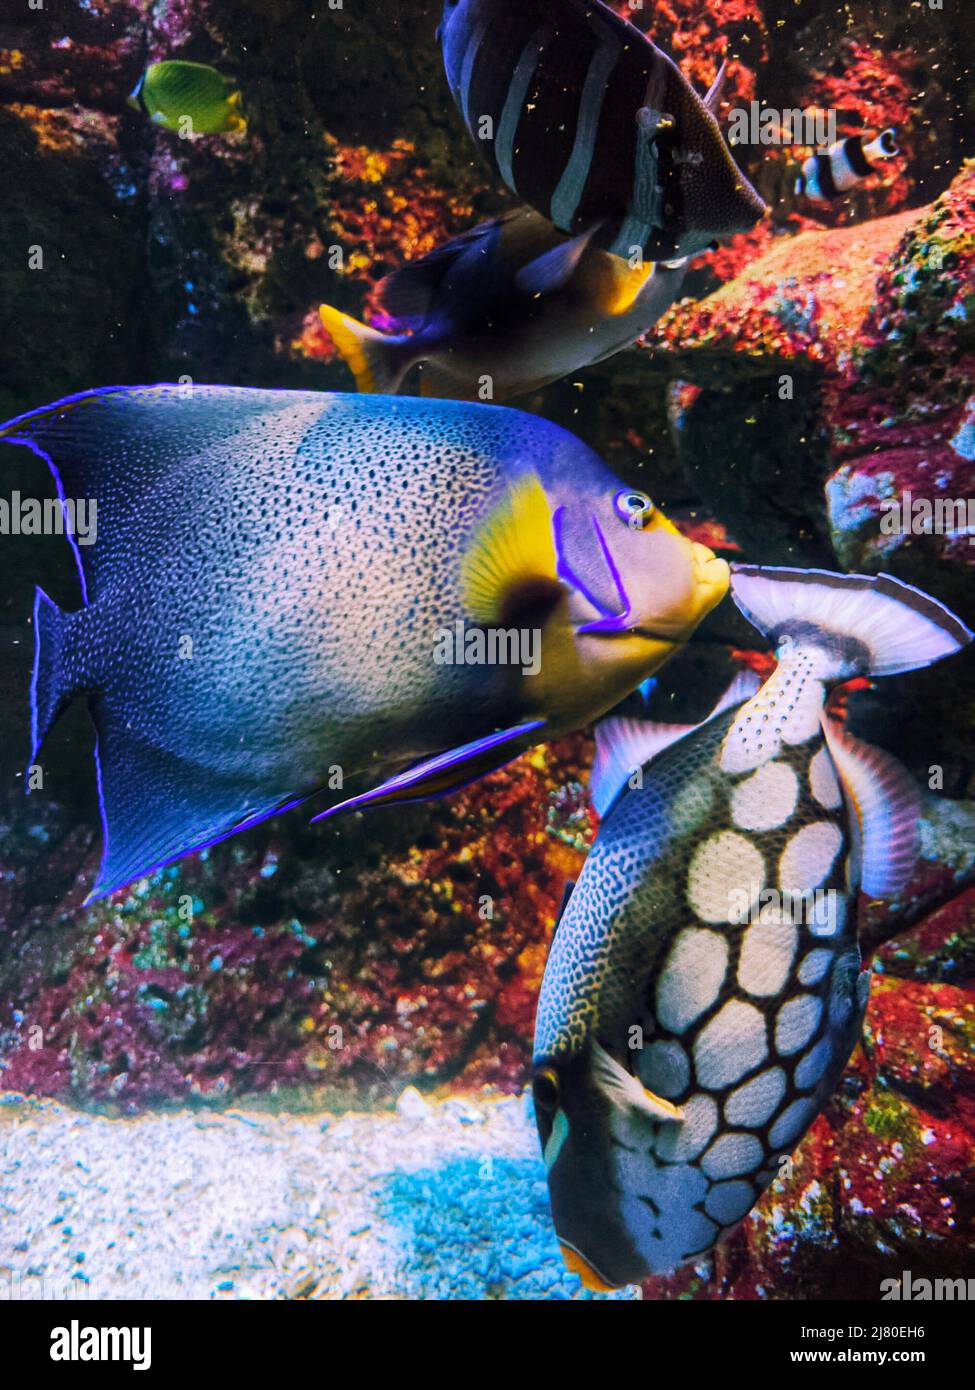 Close-up of tropical fish swimming in an aquarium Stock Photo